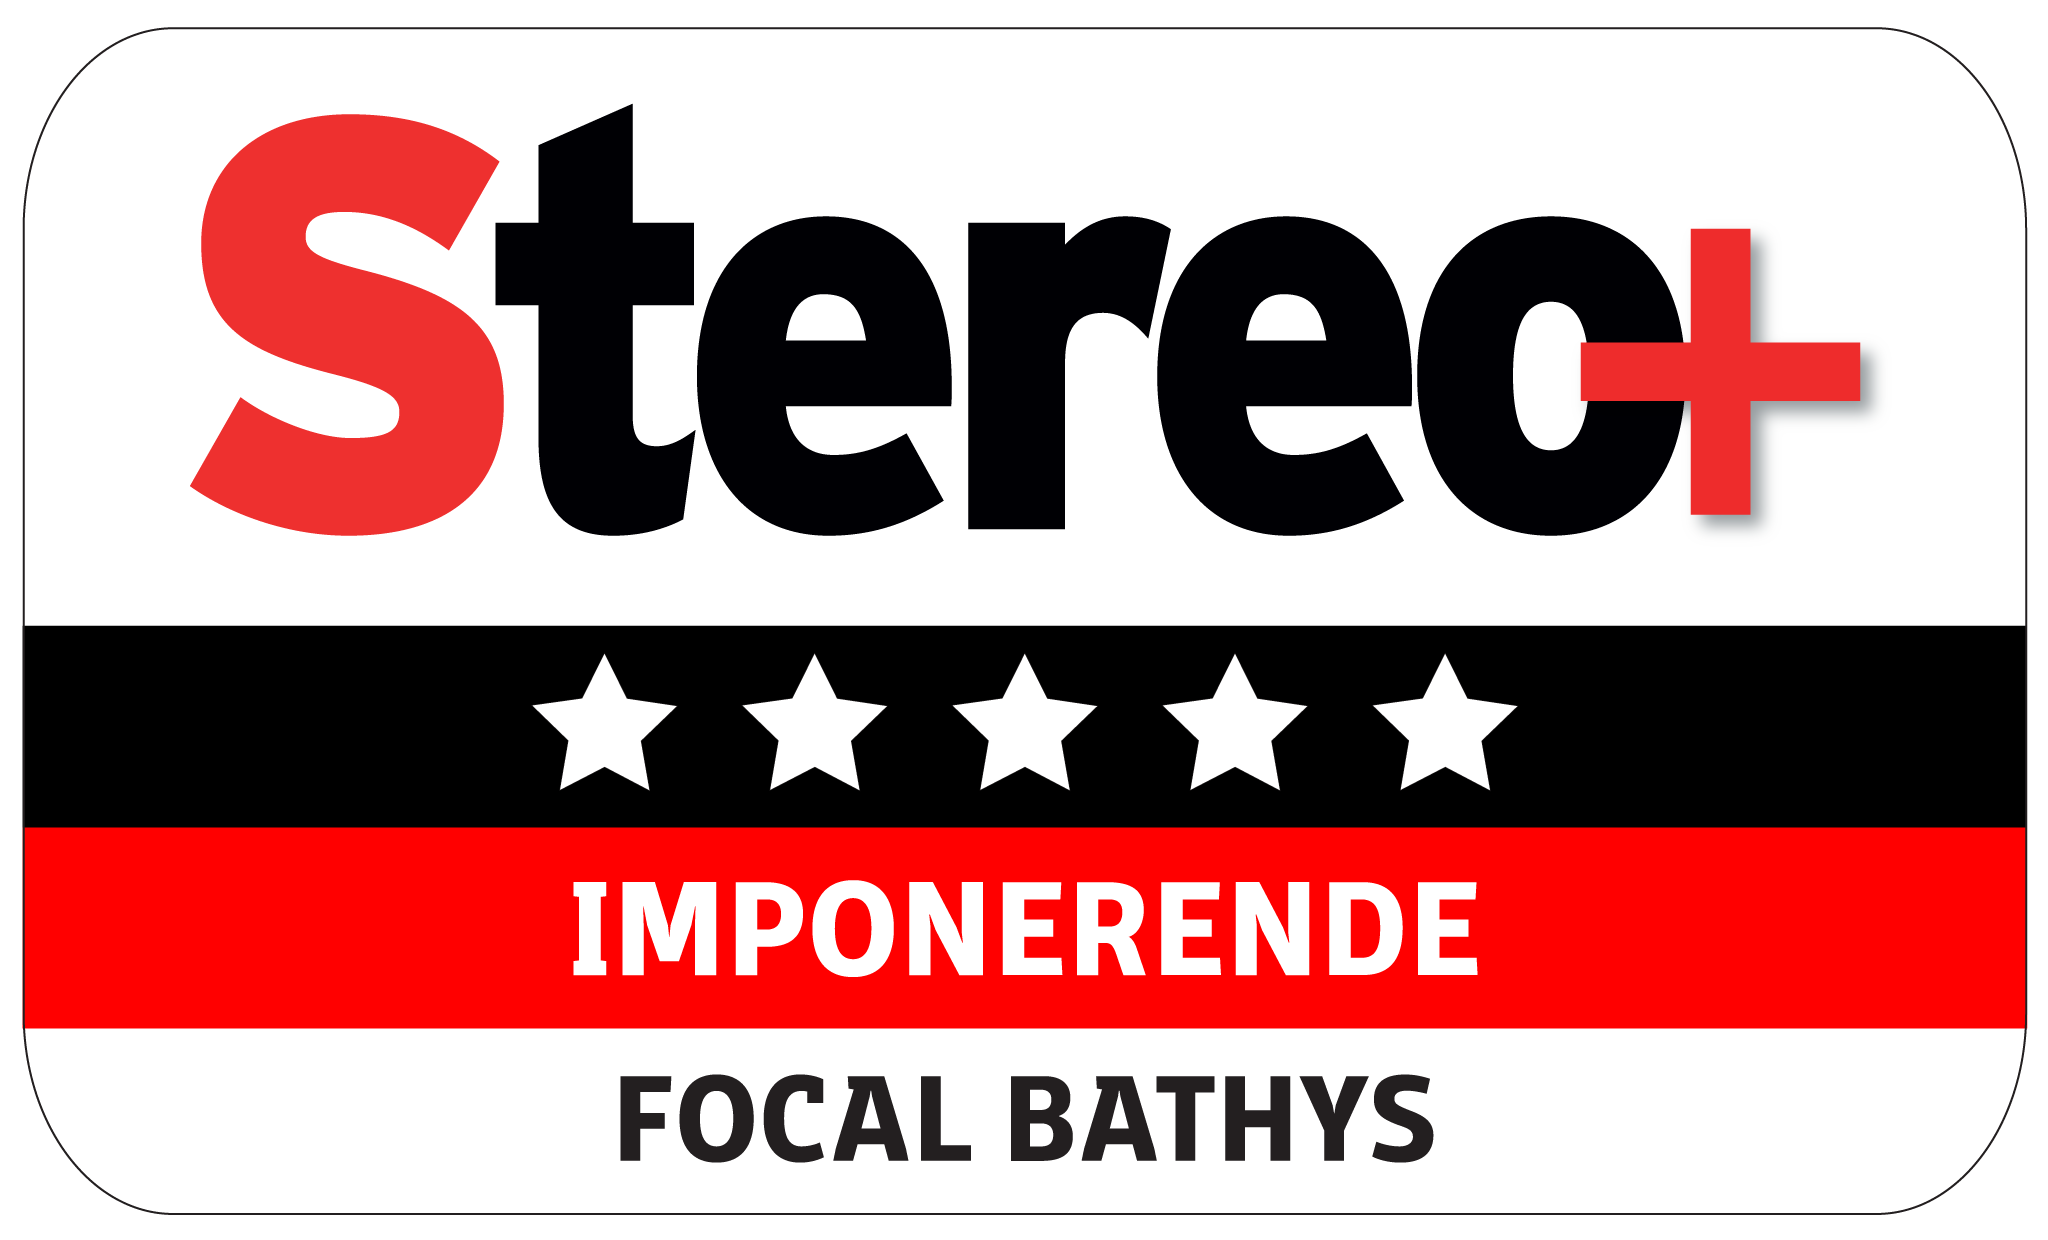 Focal Bathys Stereopluss test